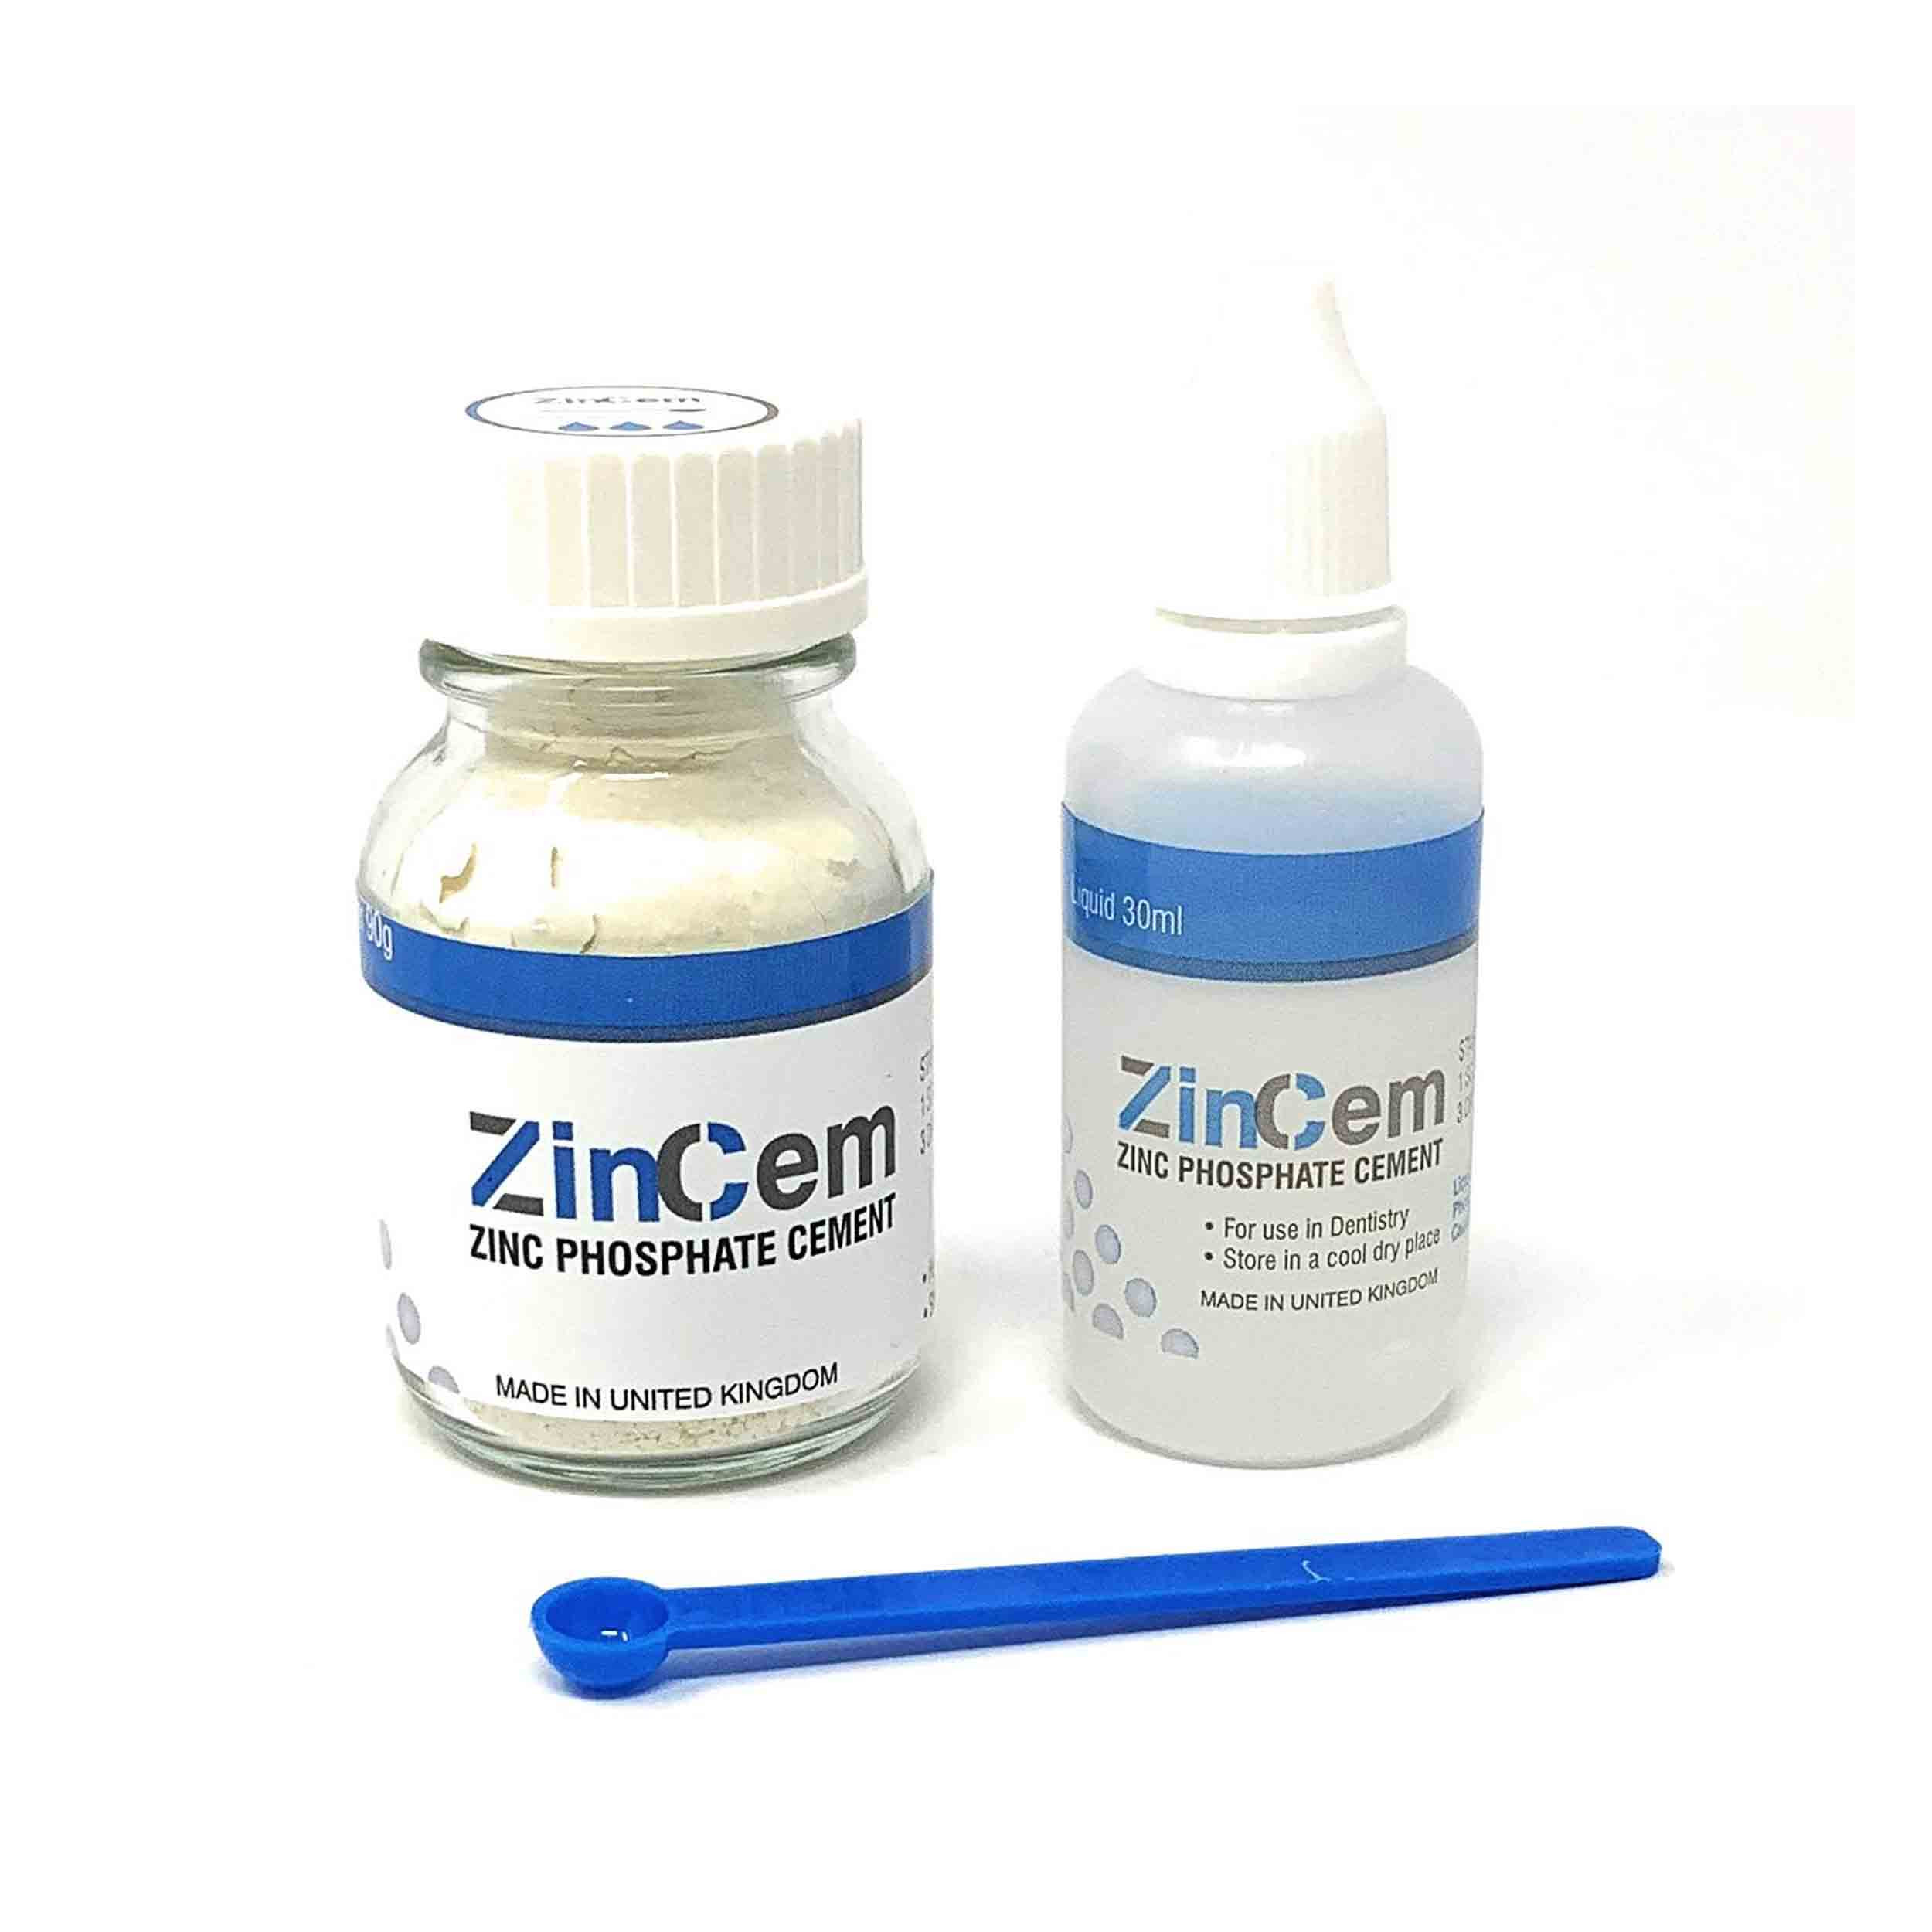 Medicept Zinc Cem (30ml)